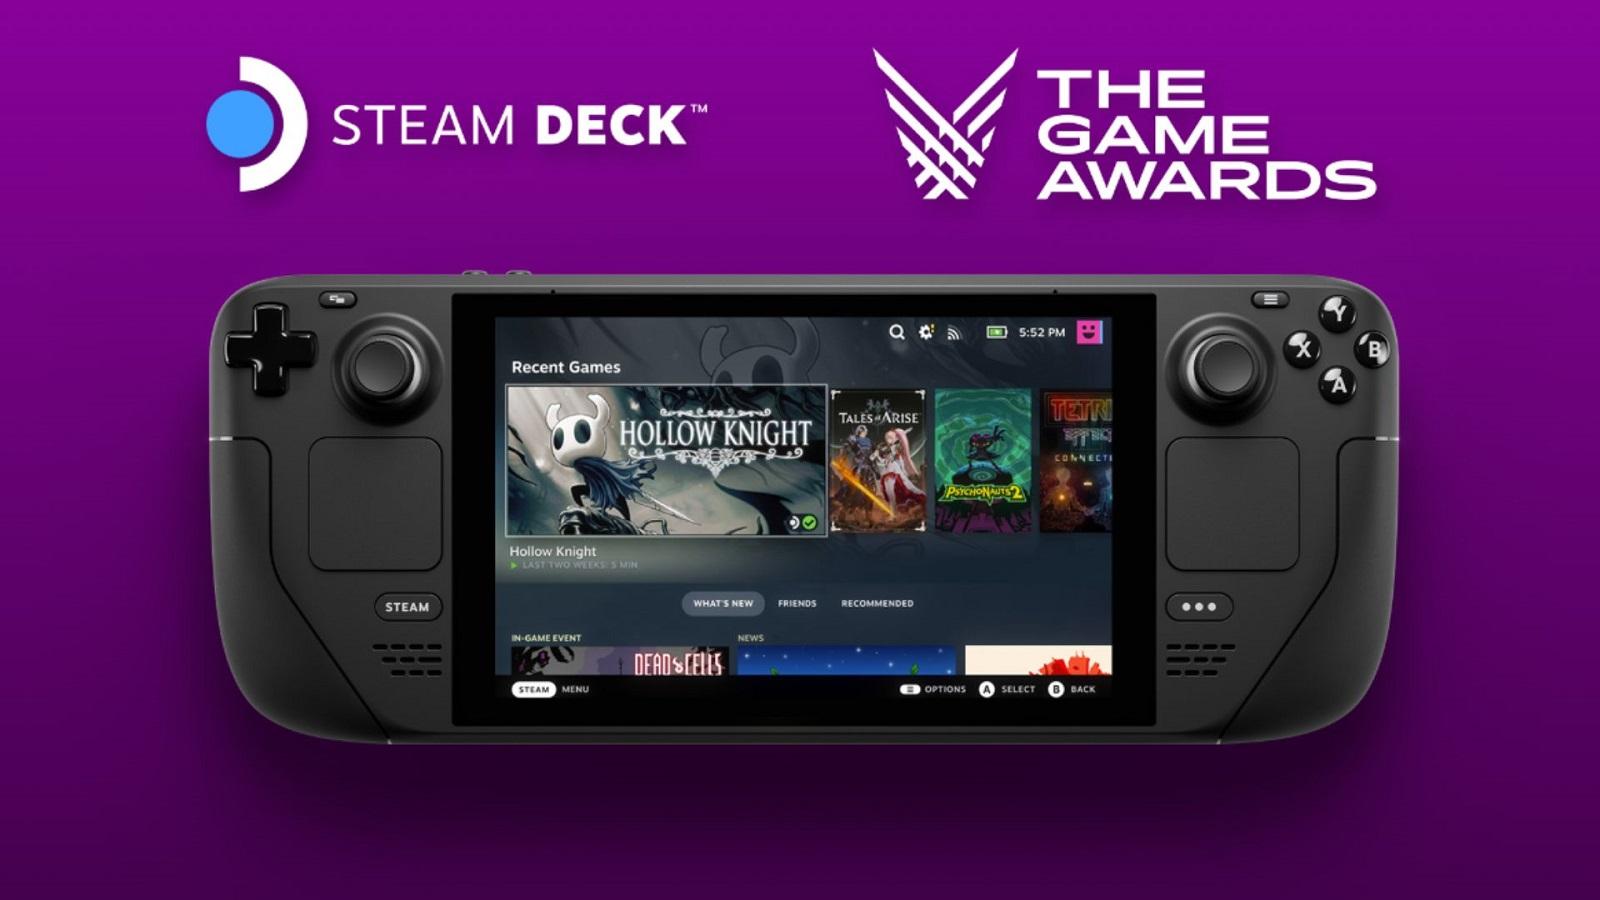 Steam Deck The Game Awards promo screenshot